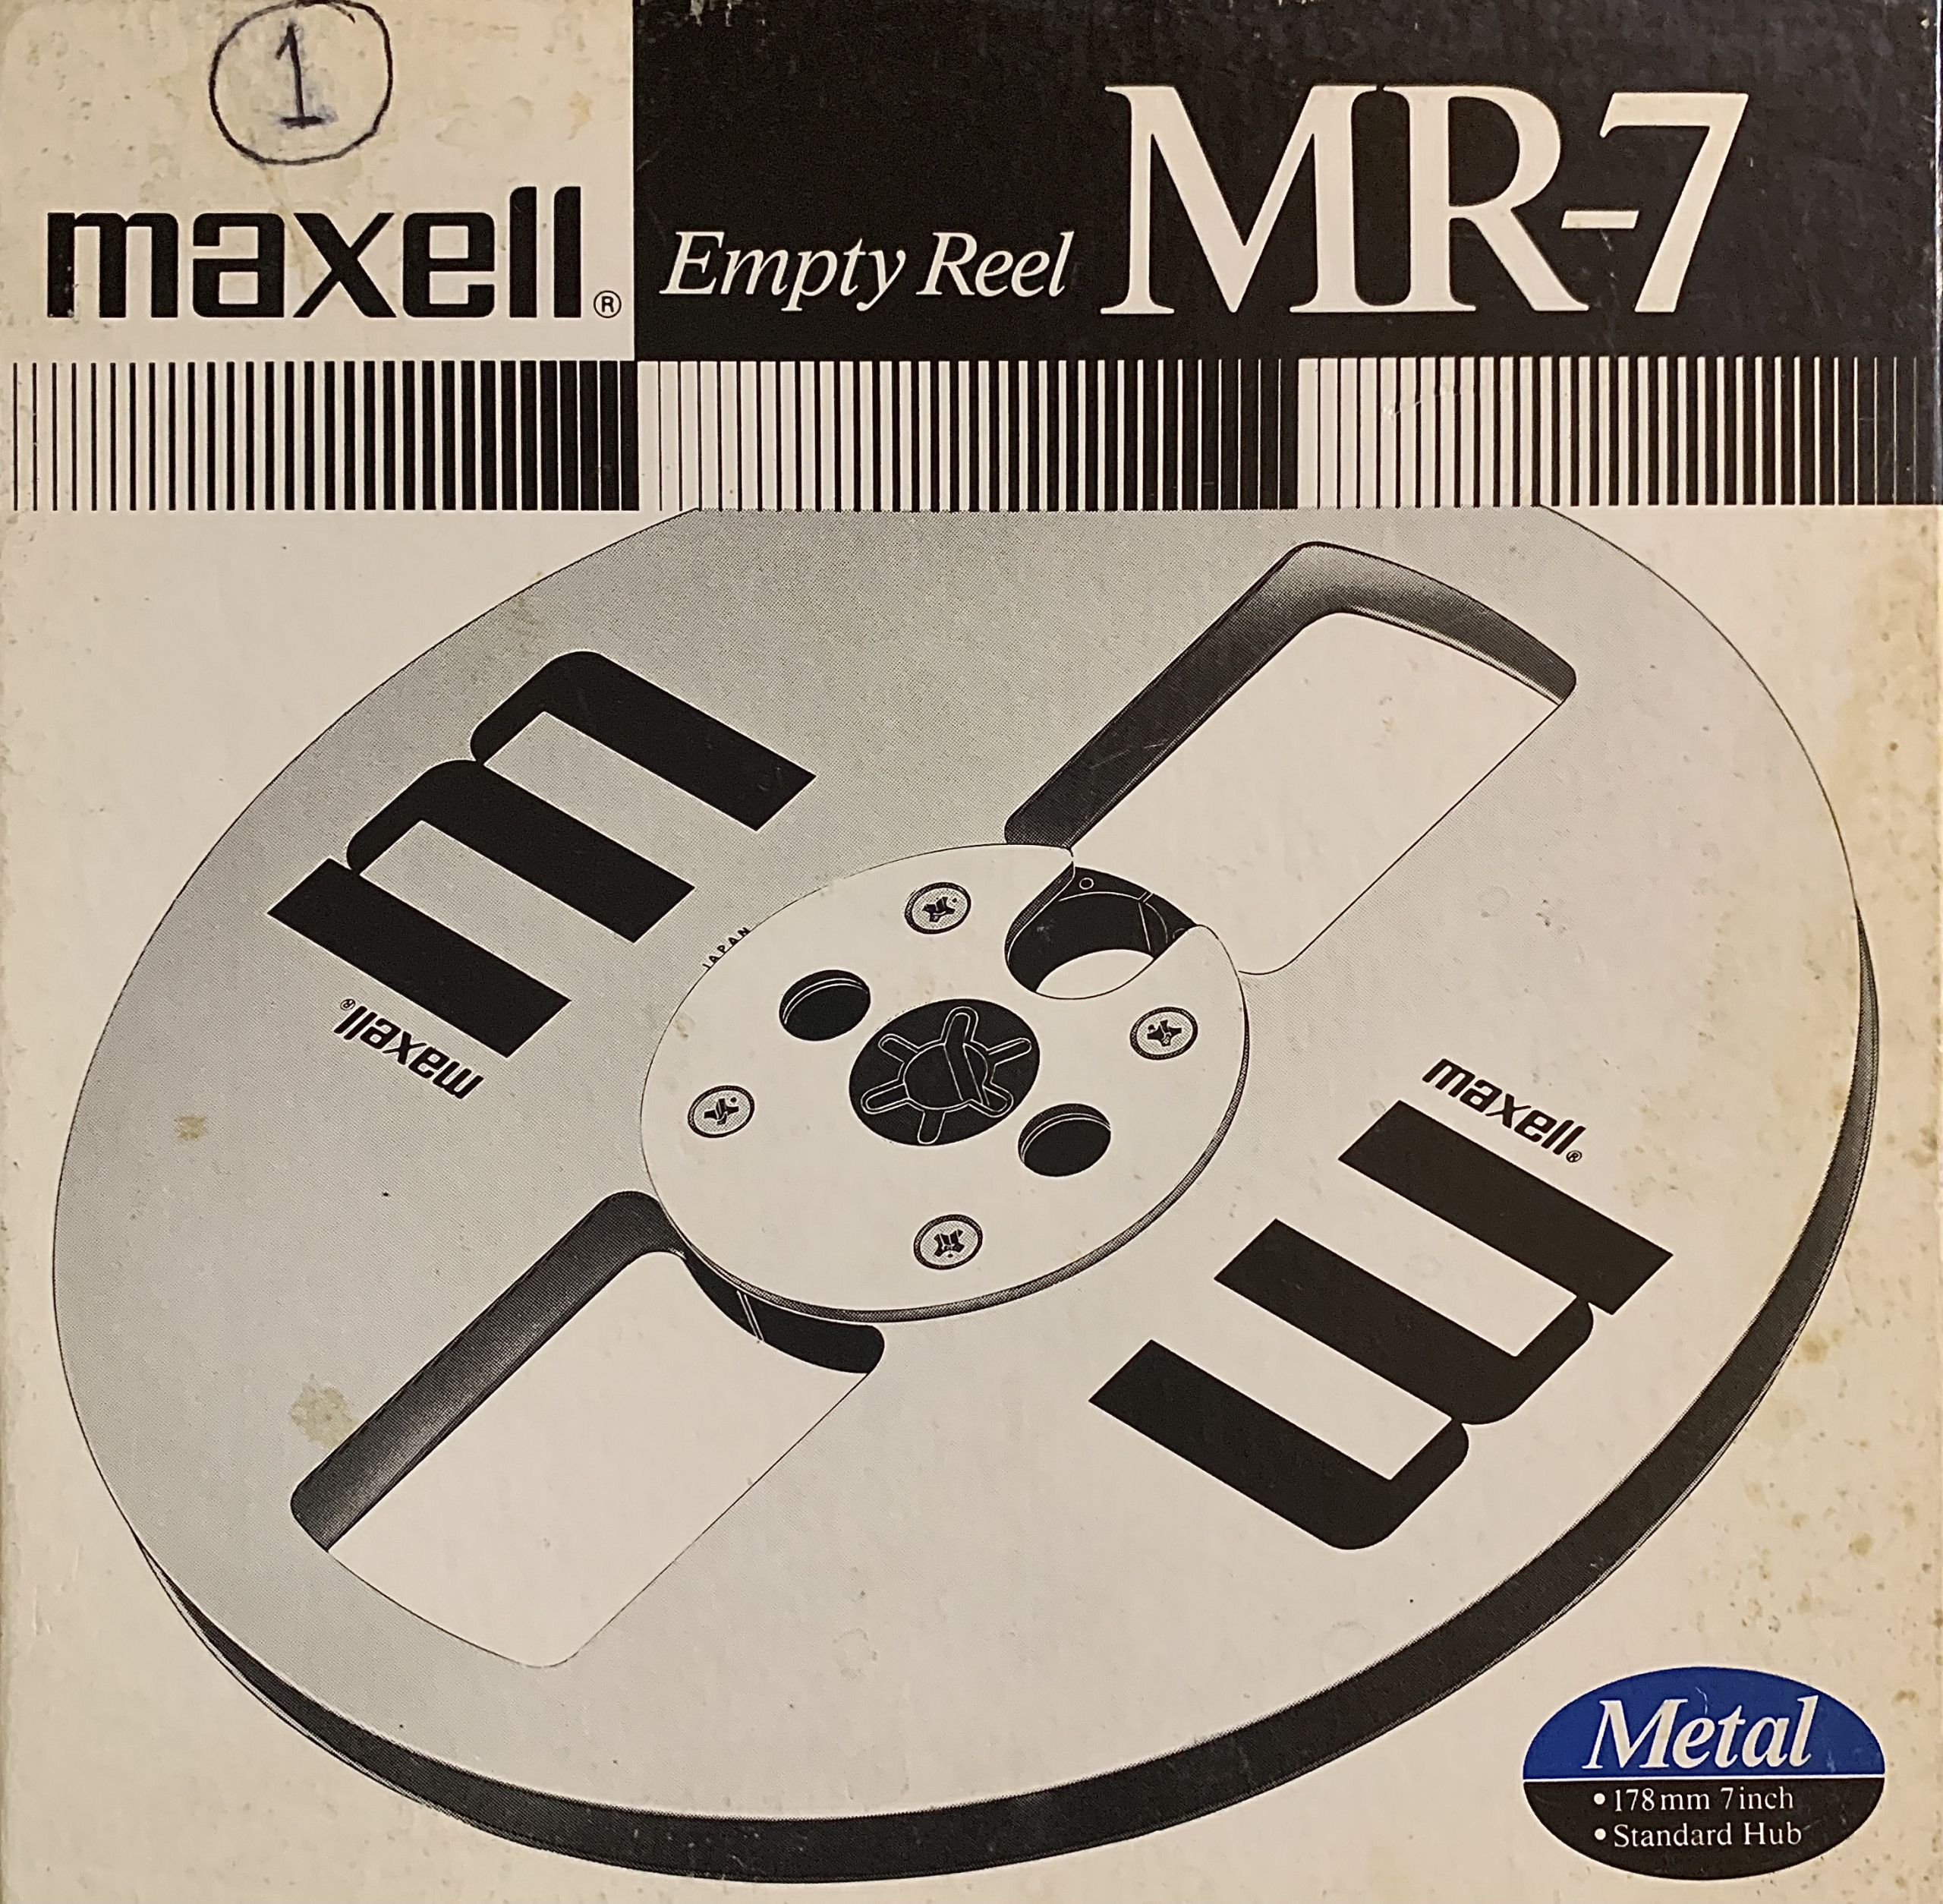 https://reeltoreelwarehouse.com/wp-content/uploads/2020/09/Maxell-MR7-Metal-Tape-Reel-Box-scaled.jpg